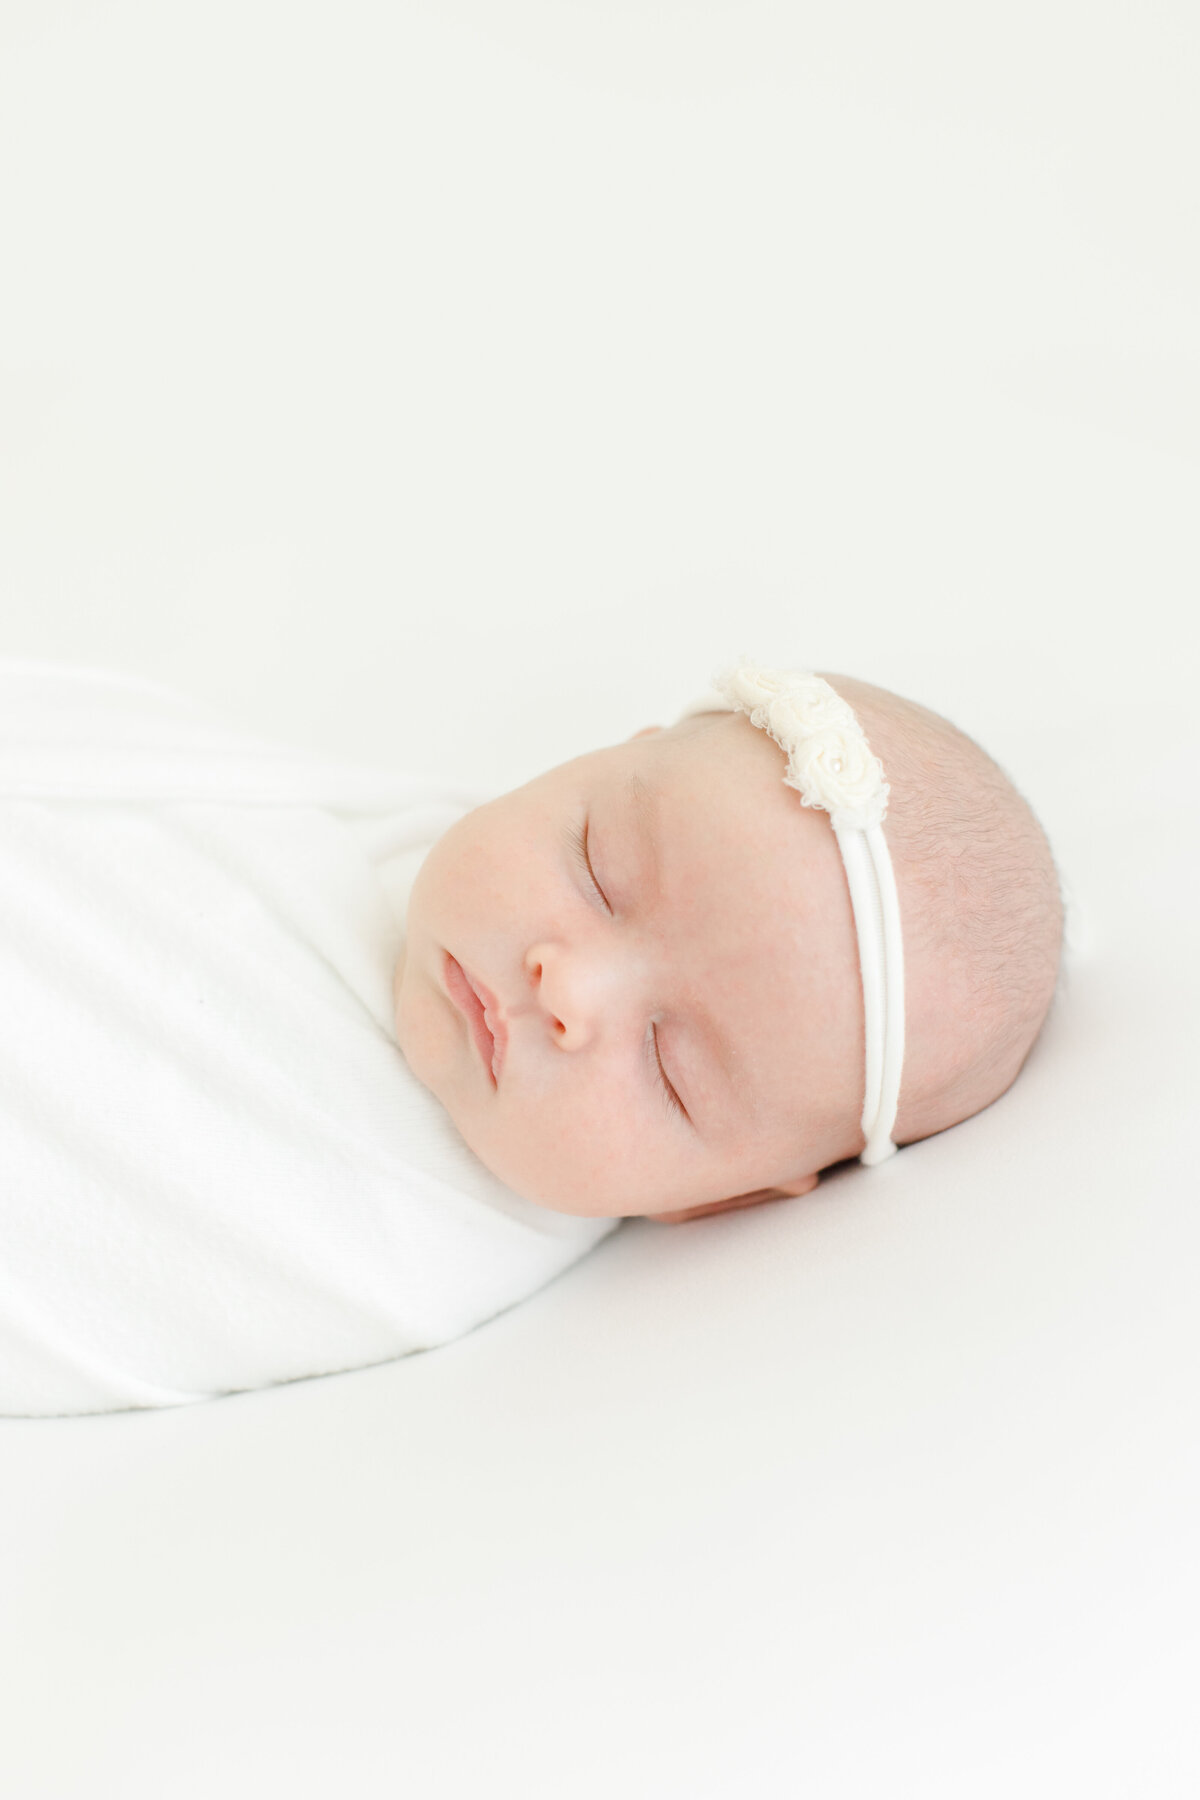 Westport CT Newborn Photographer - 20